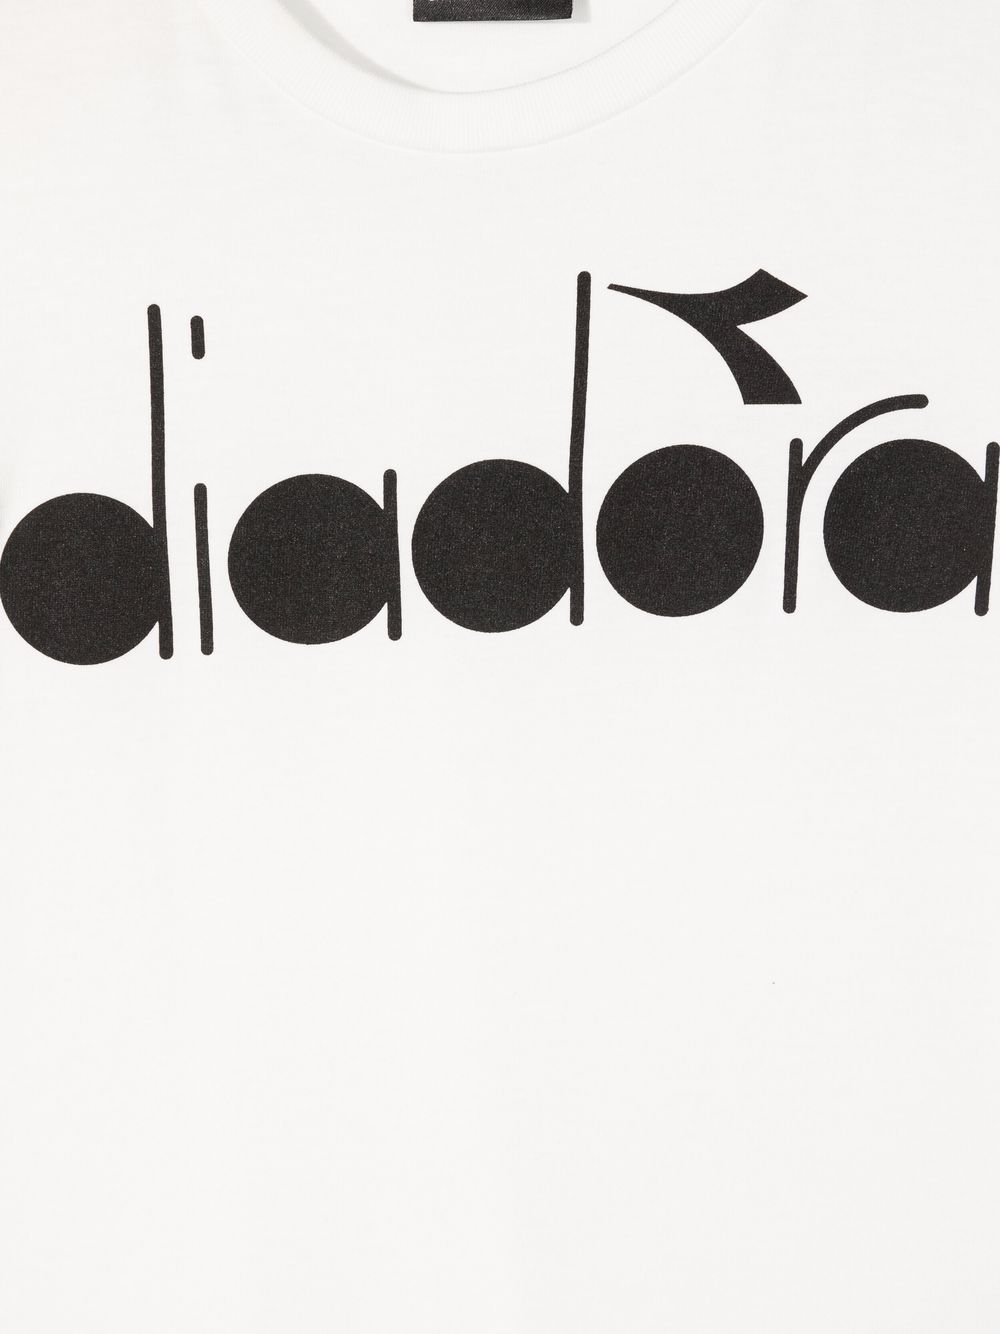 фото Diadora junior футболка с логотипом